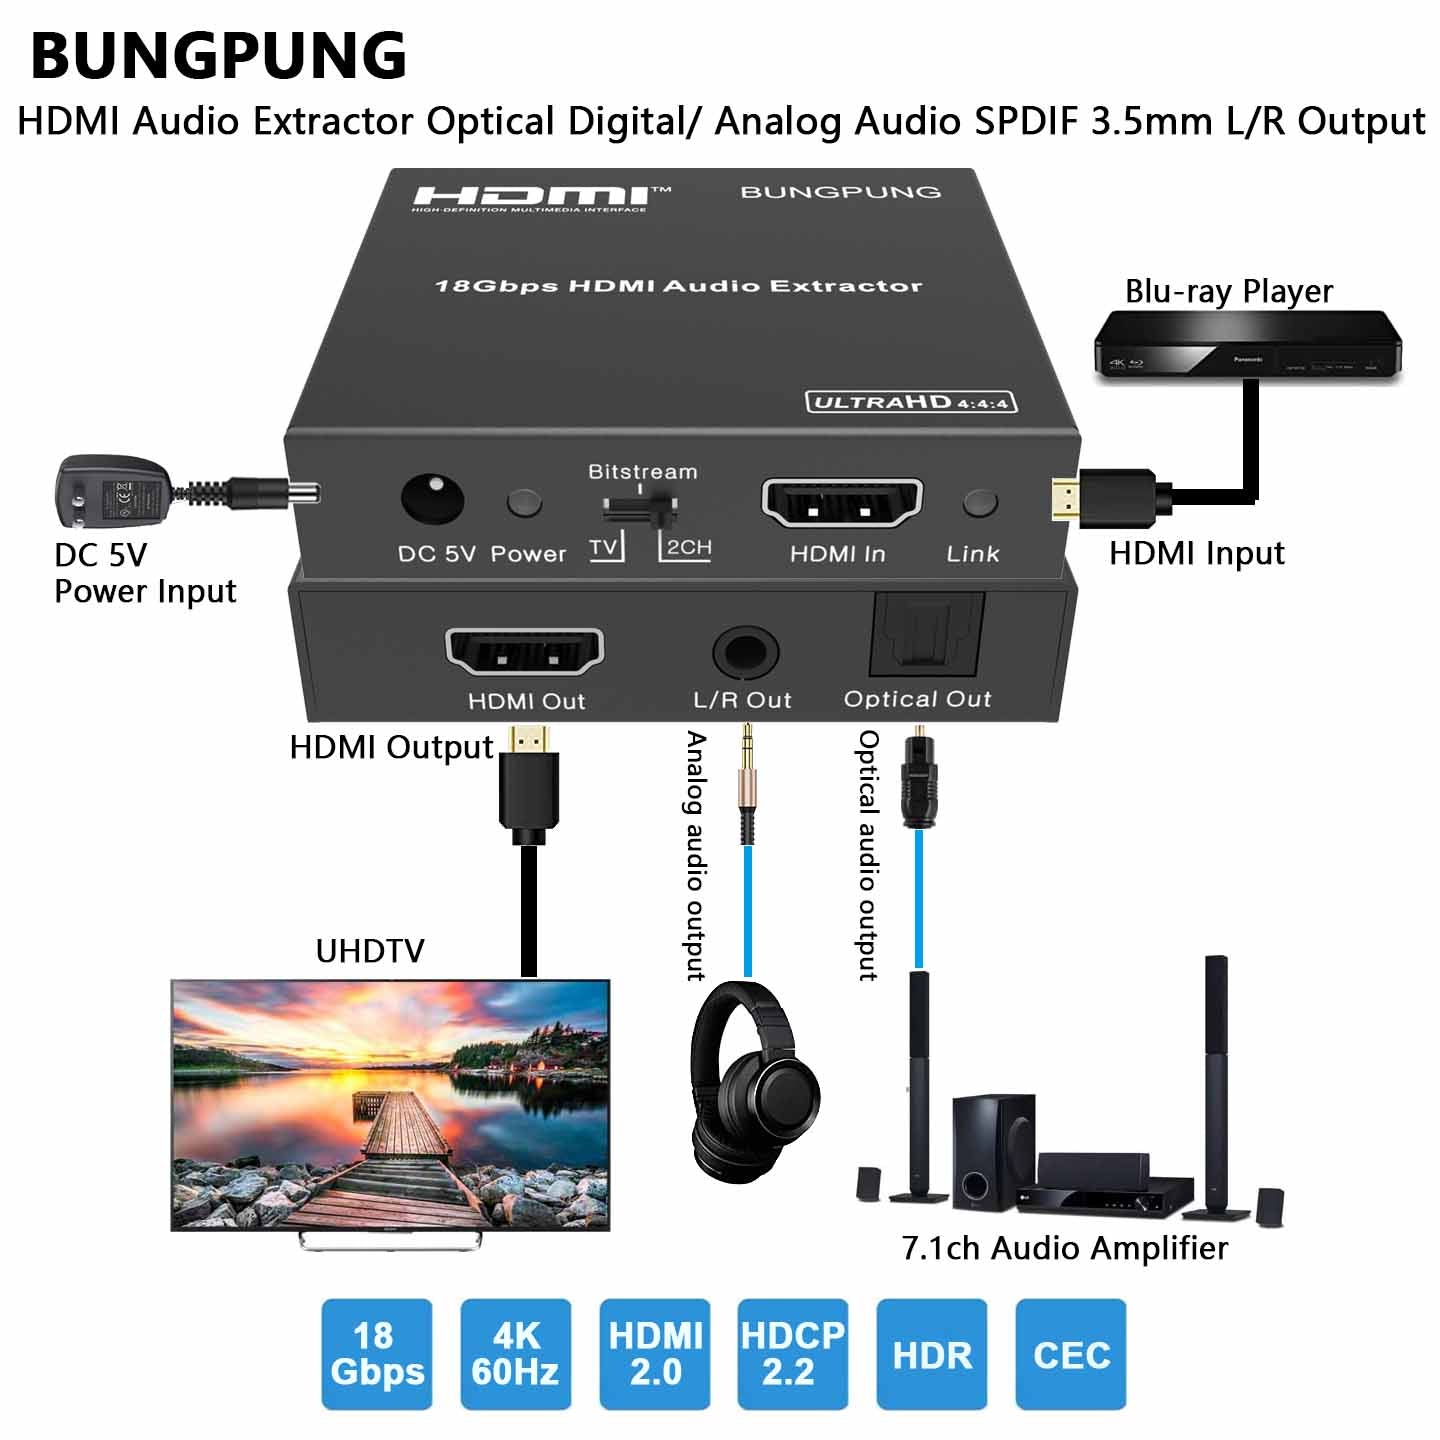 HDMI Audio Extractor 4K 60Hz connection